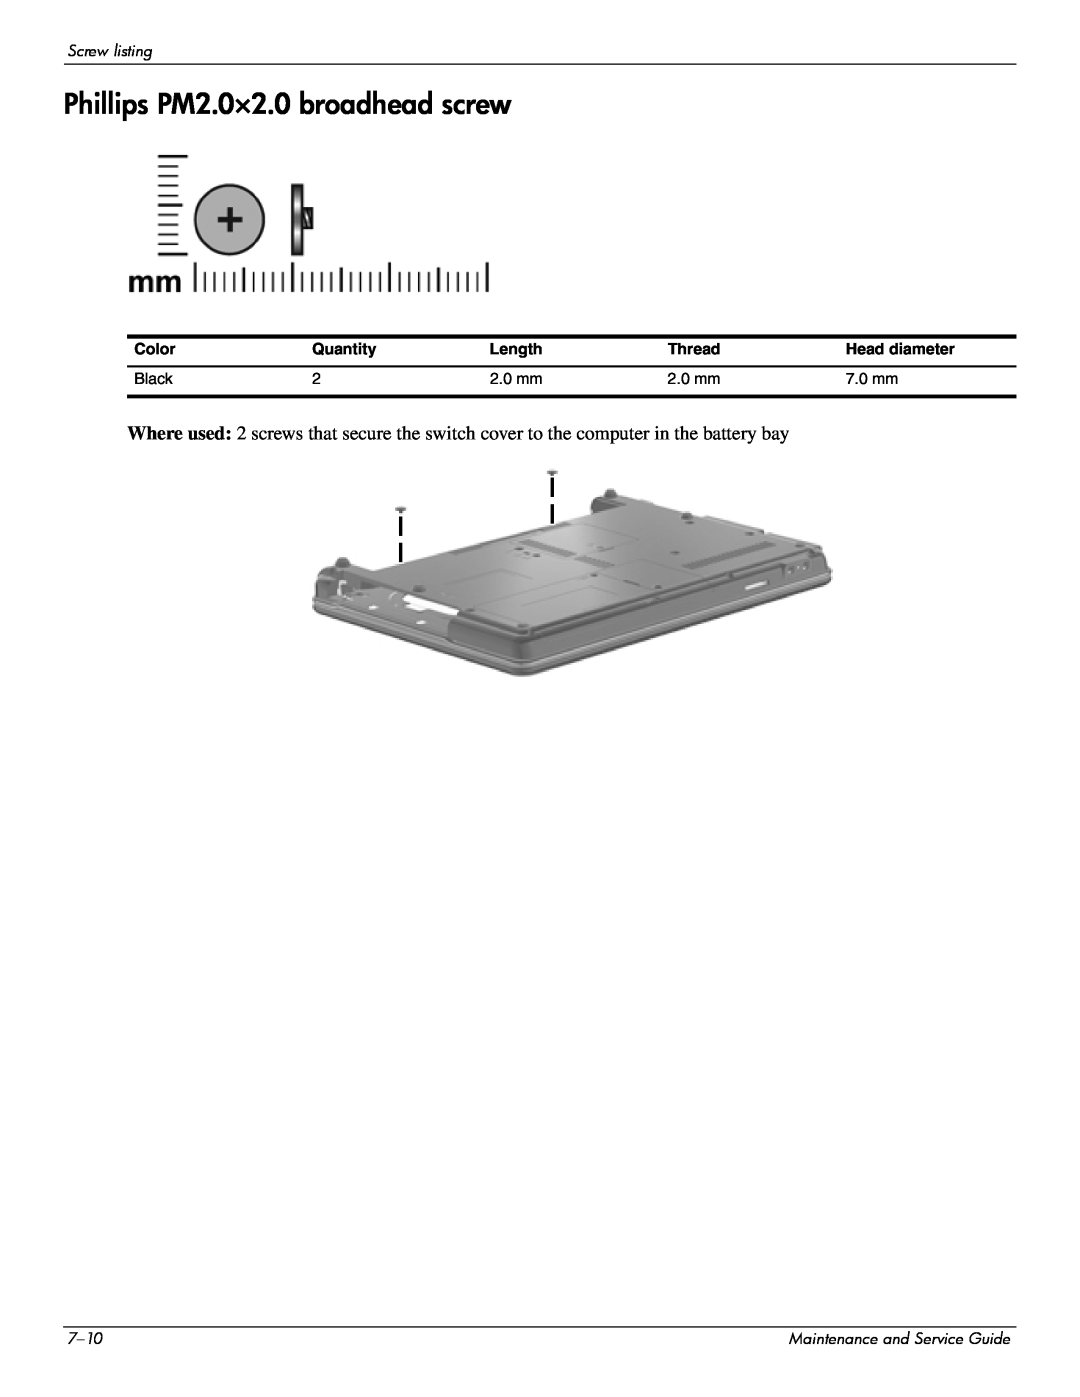 Compaq 511, 510, 515 manual Phillips PM2.0×2.0 broadhead screw, Maintenance and Service Guide 